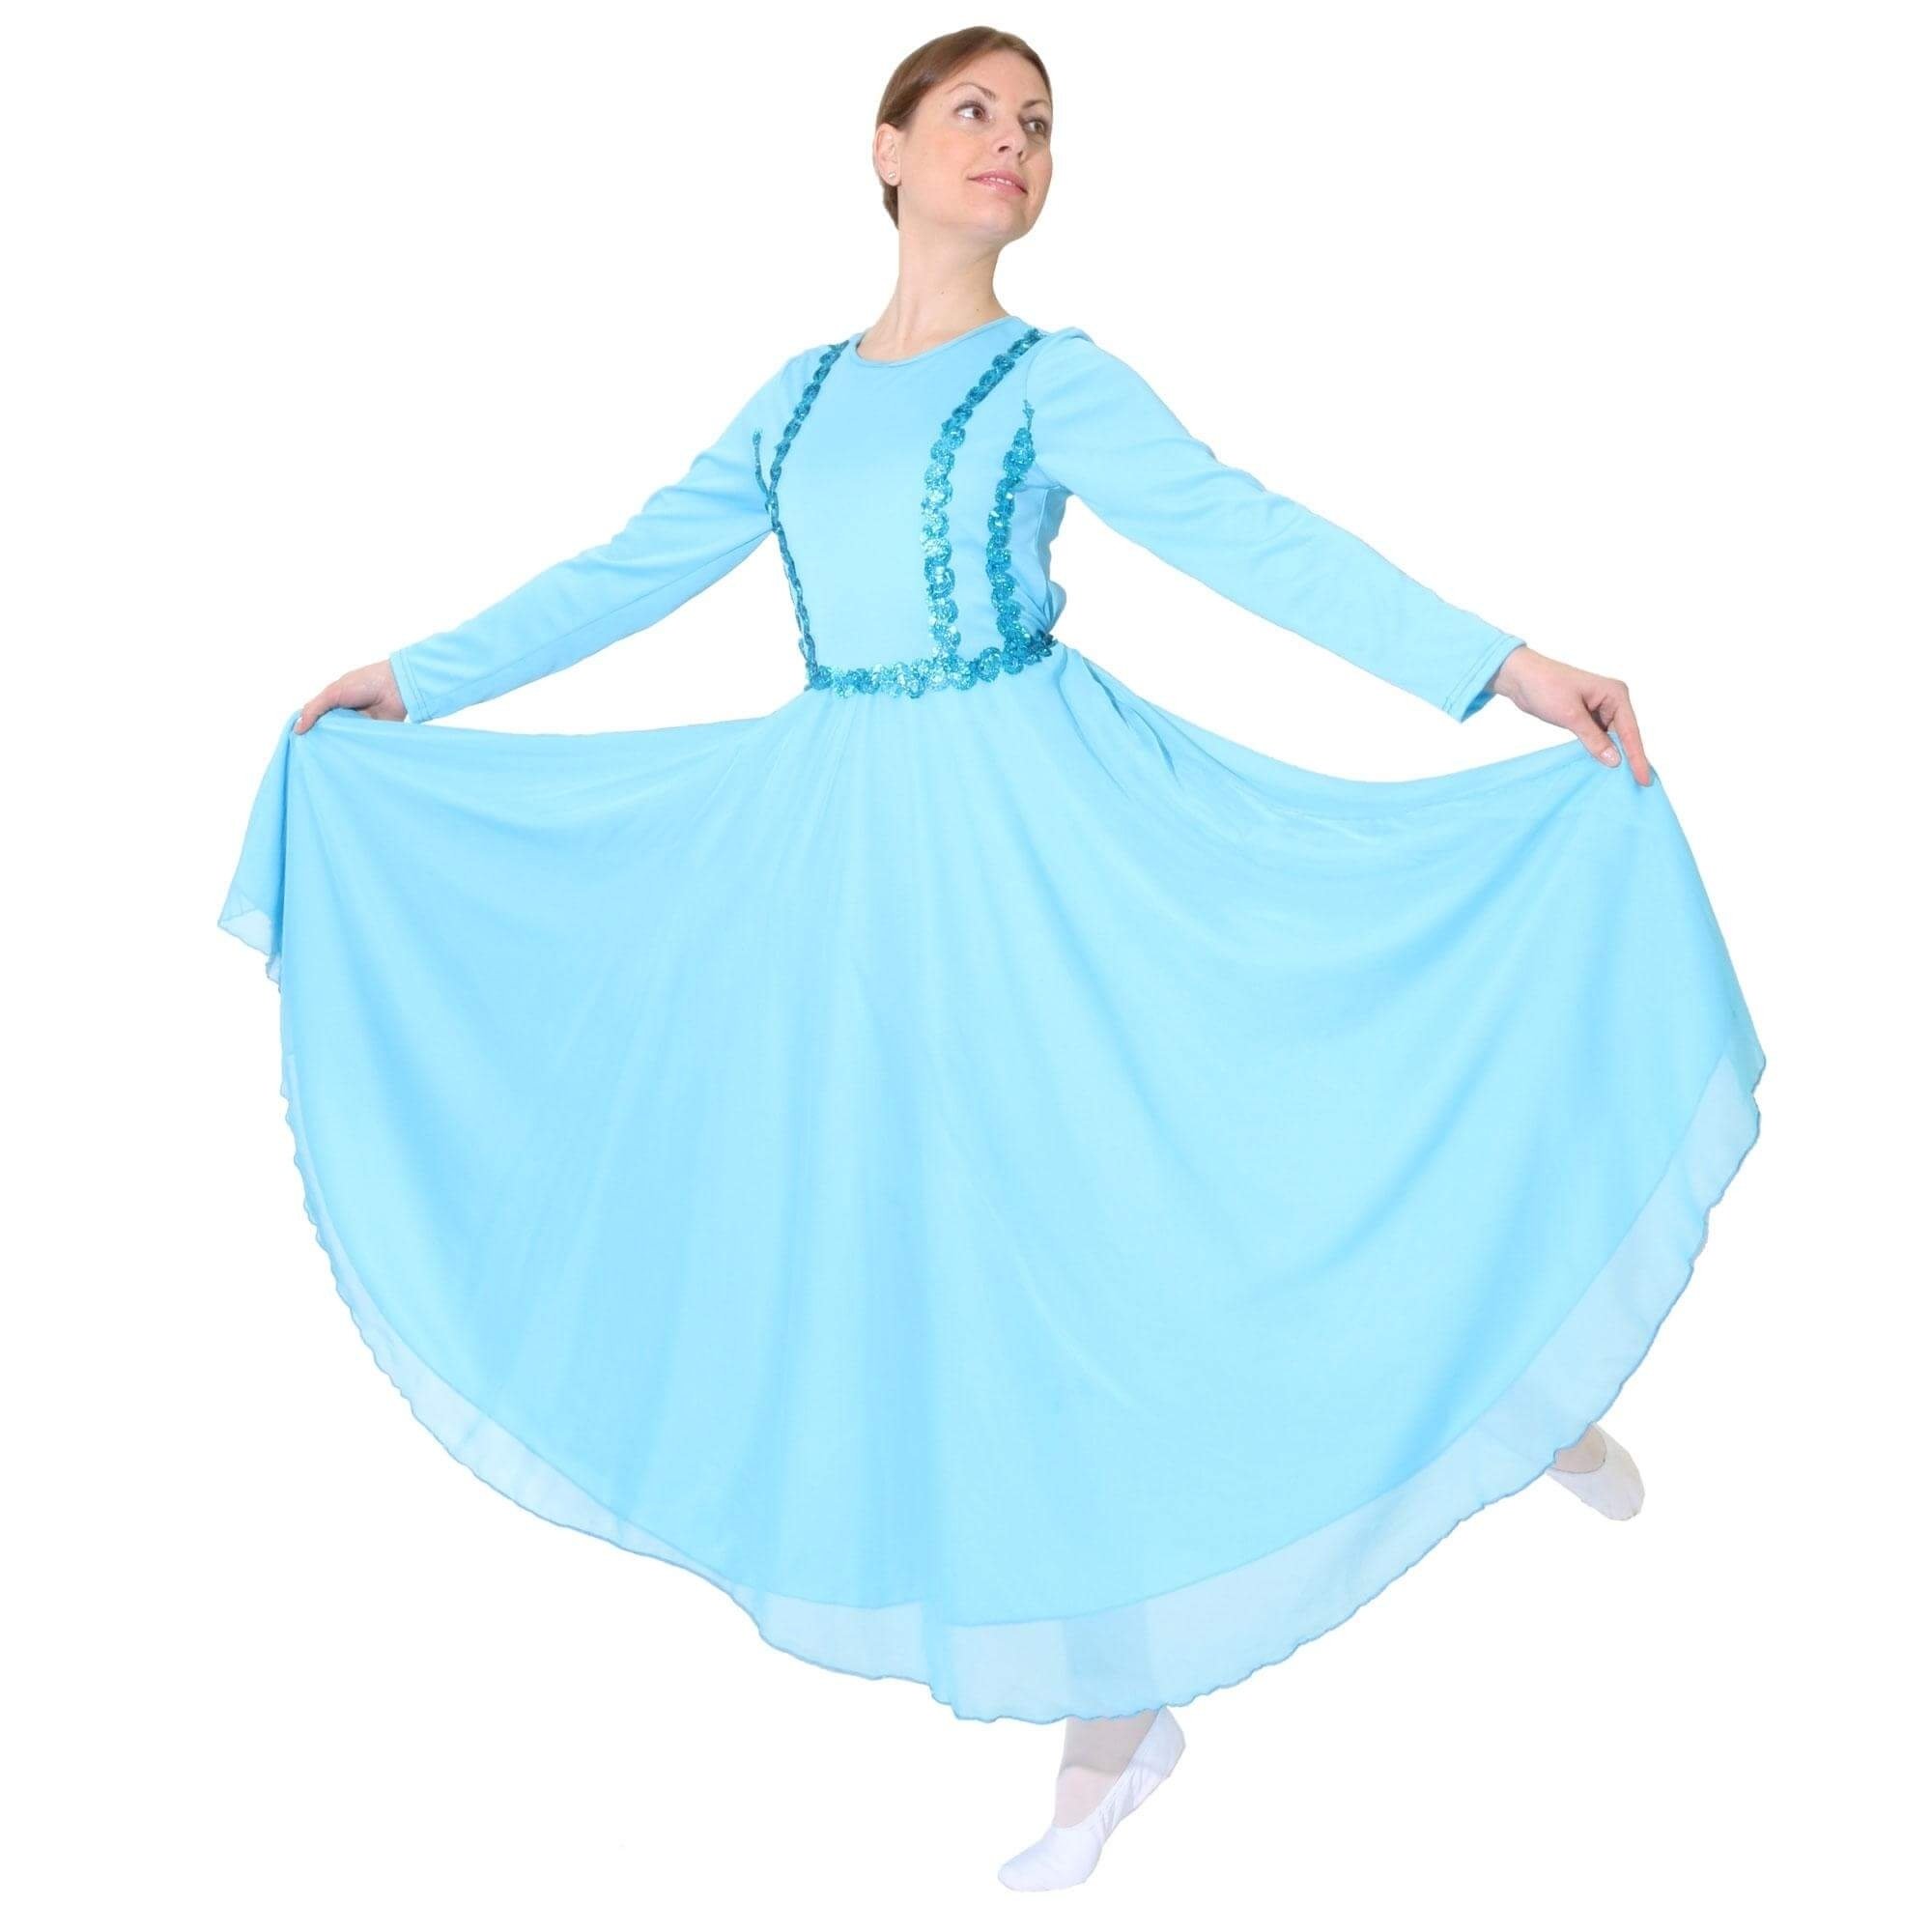 Danzcue Full Length Vivid Chiffon Praise Dance Dress - Click Image to Close